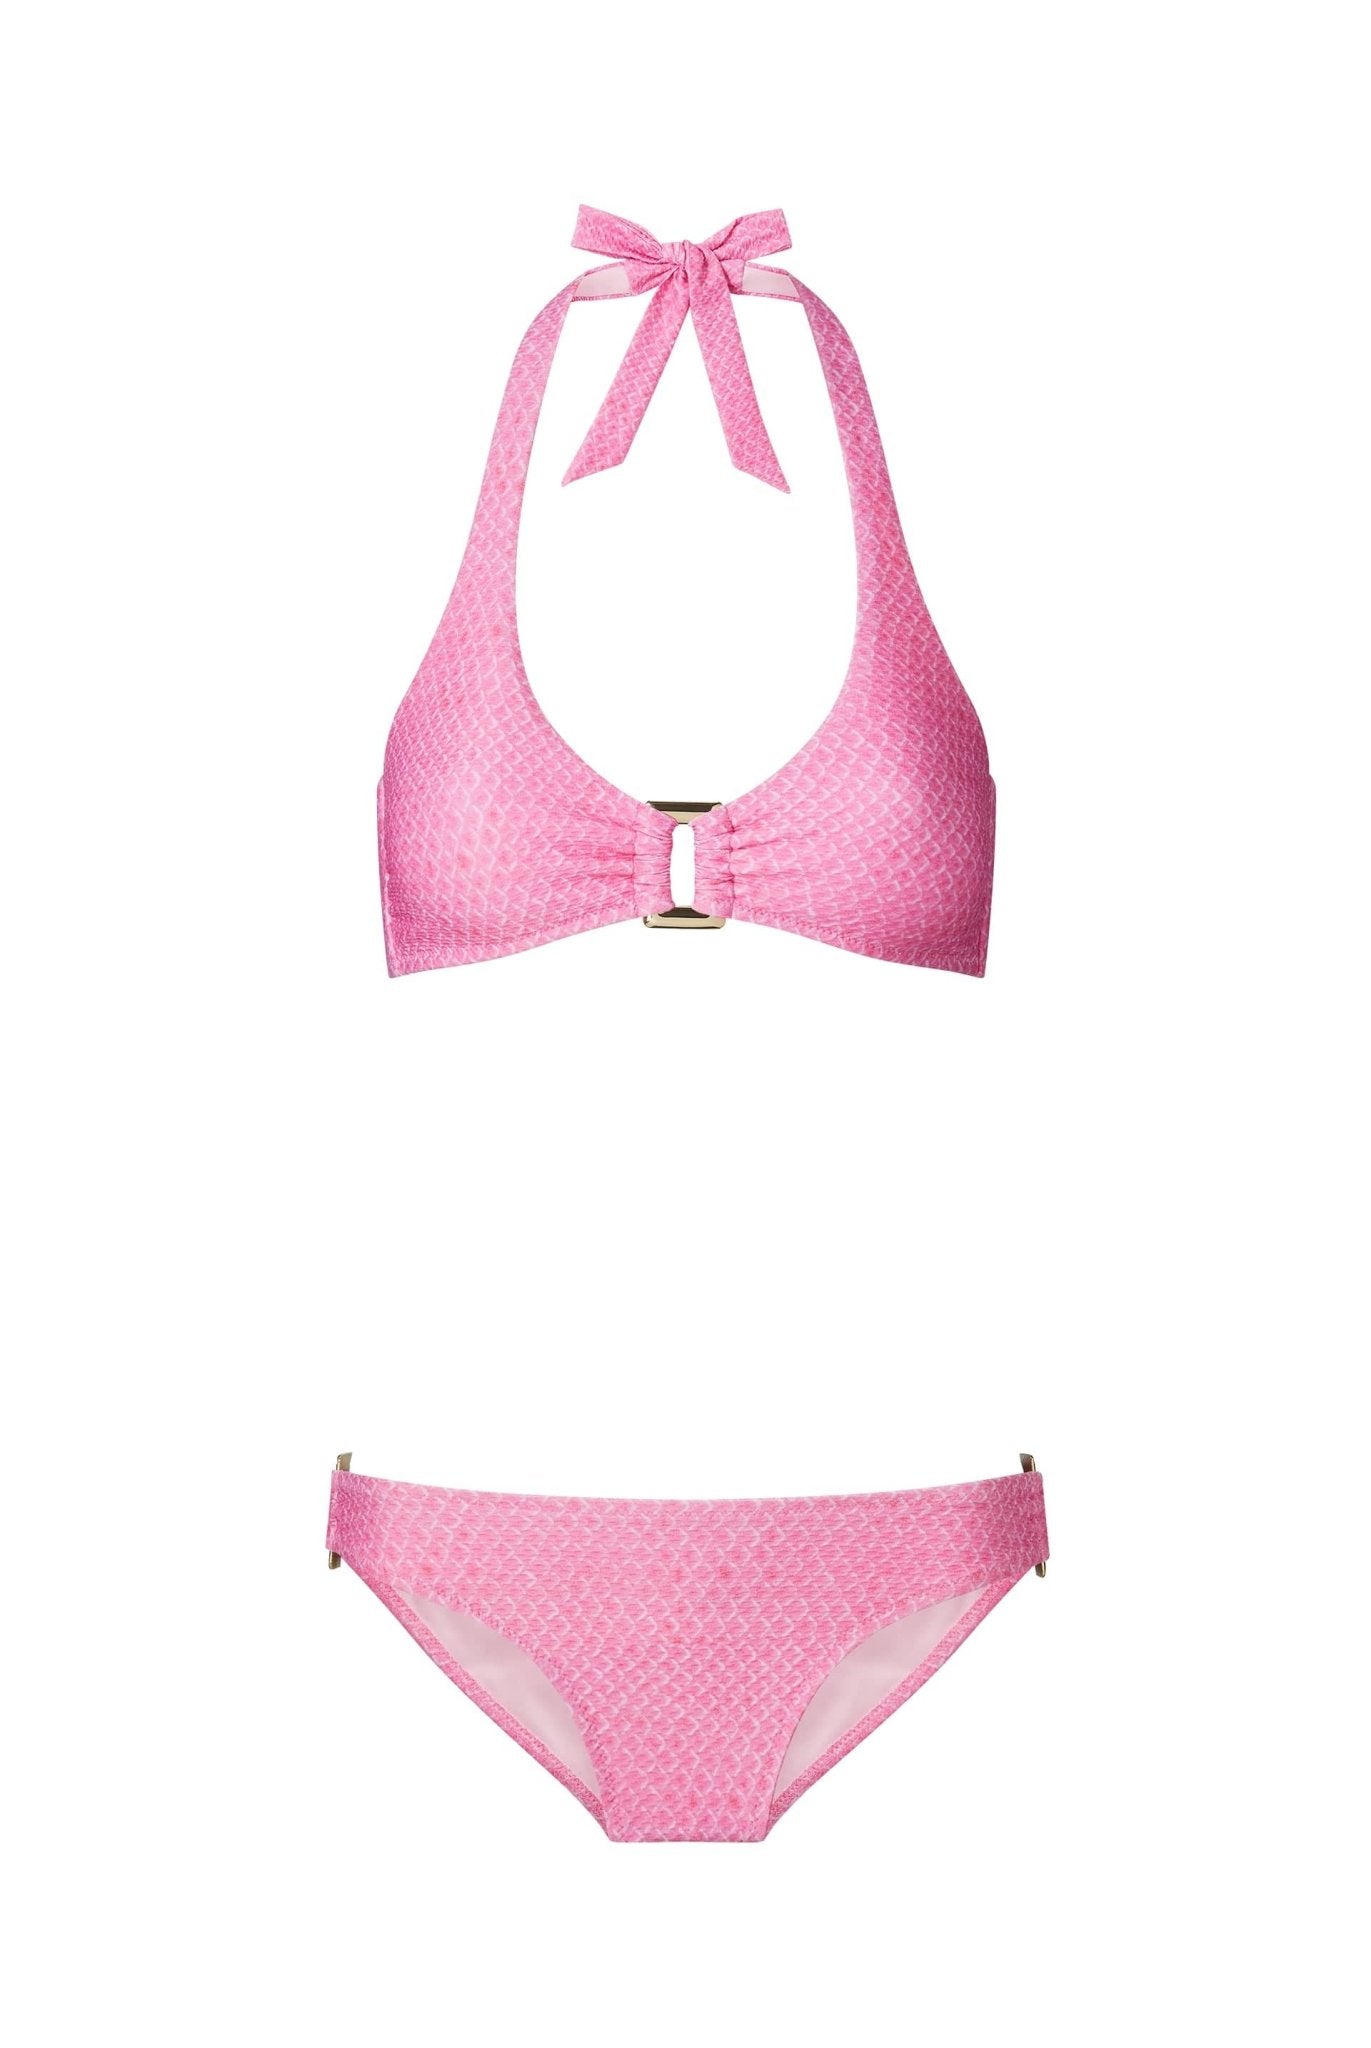 Guana Island Halter Neck Rectangle Top In Pink - Heidi Klein - UK Store